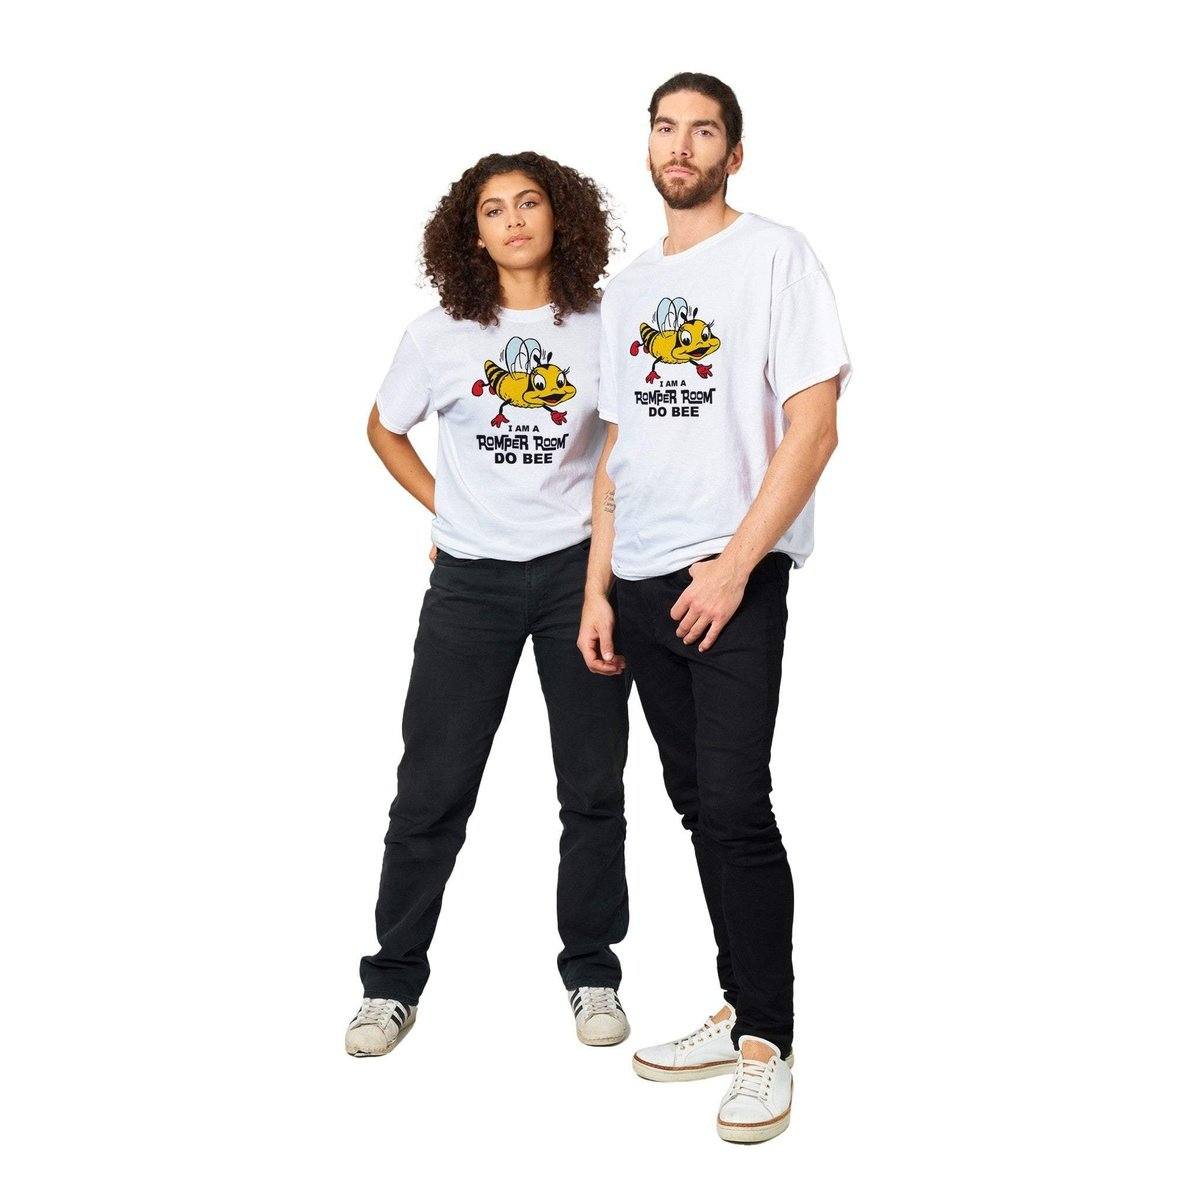 Romper Room Do Bee T-Shirt - 70's - 80's Do Bee Tshirt - Unisex Crewneck T-shirt Australia Online Color